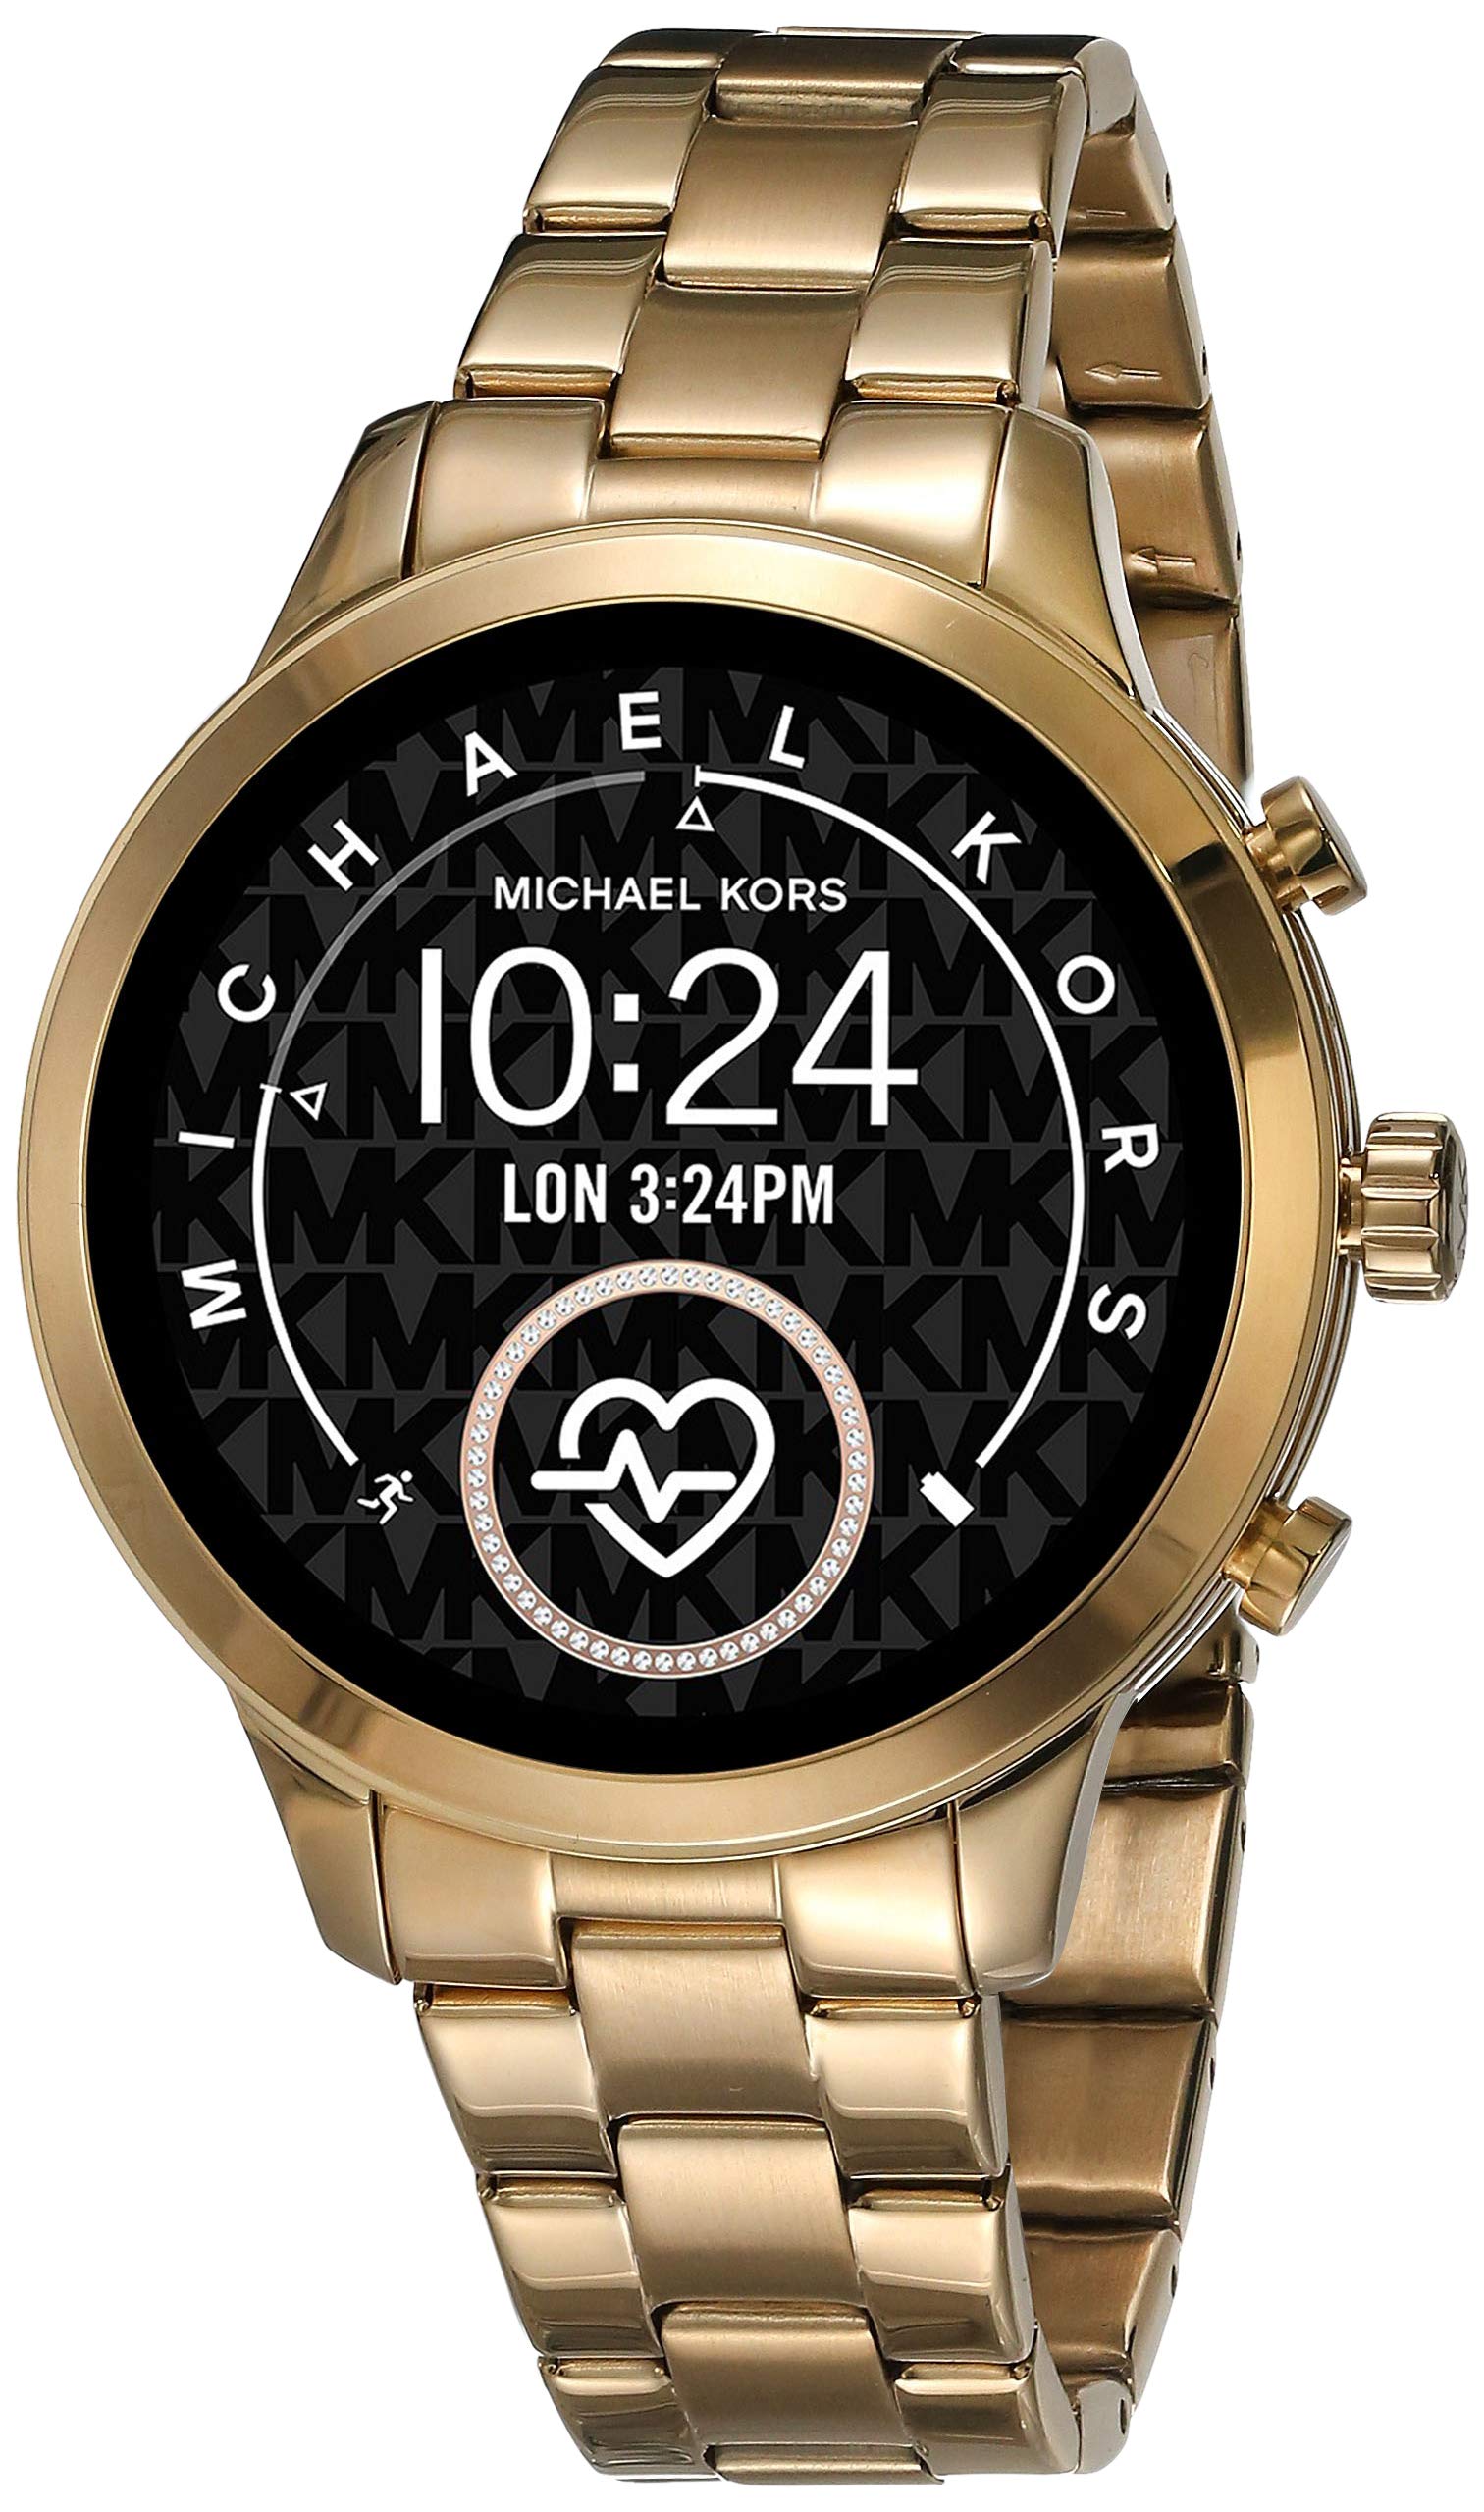 NEW WITH TAGS Michael Kors Access Gen 4 Runway Smartwatch MKT5048  796483409361  eBay